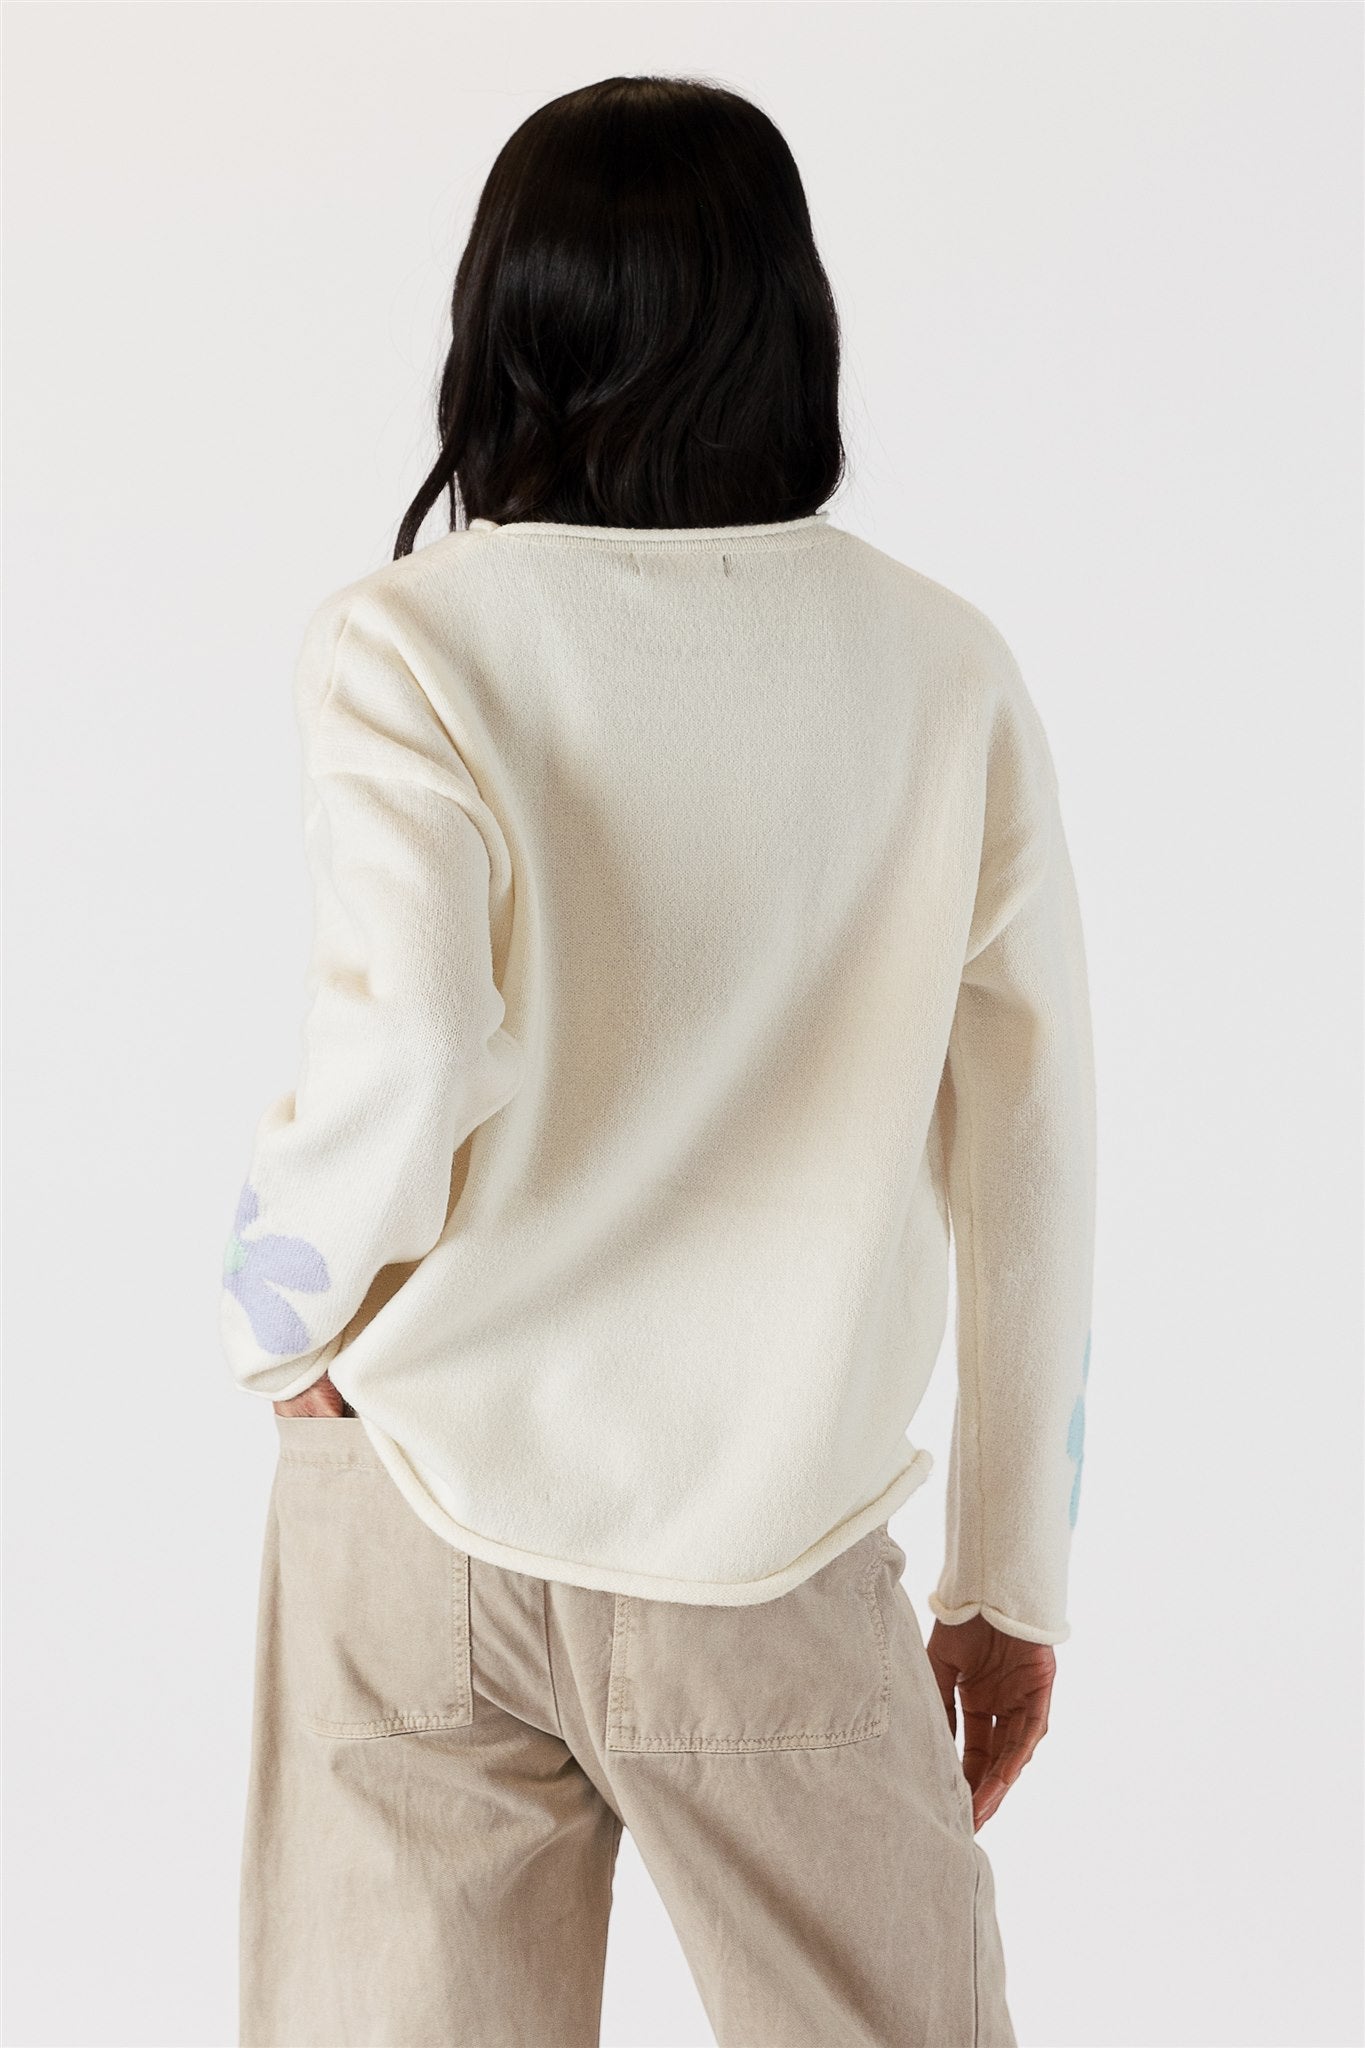 Lyla+Luxe Top - Flower Power Sweater - Off White